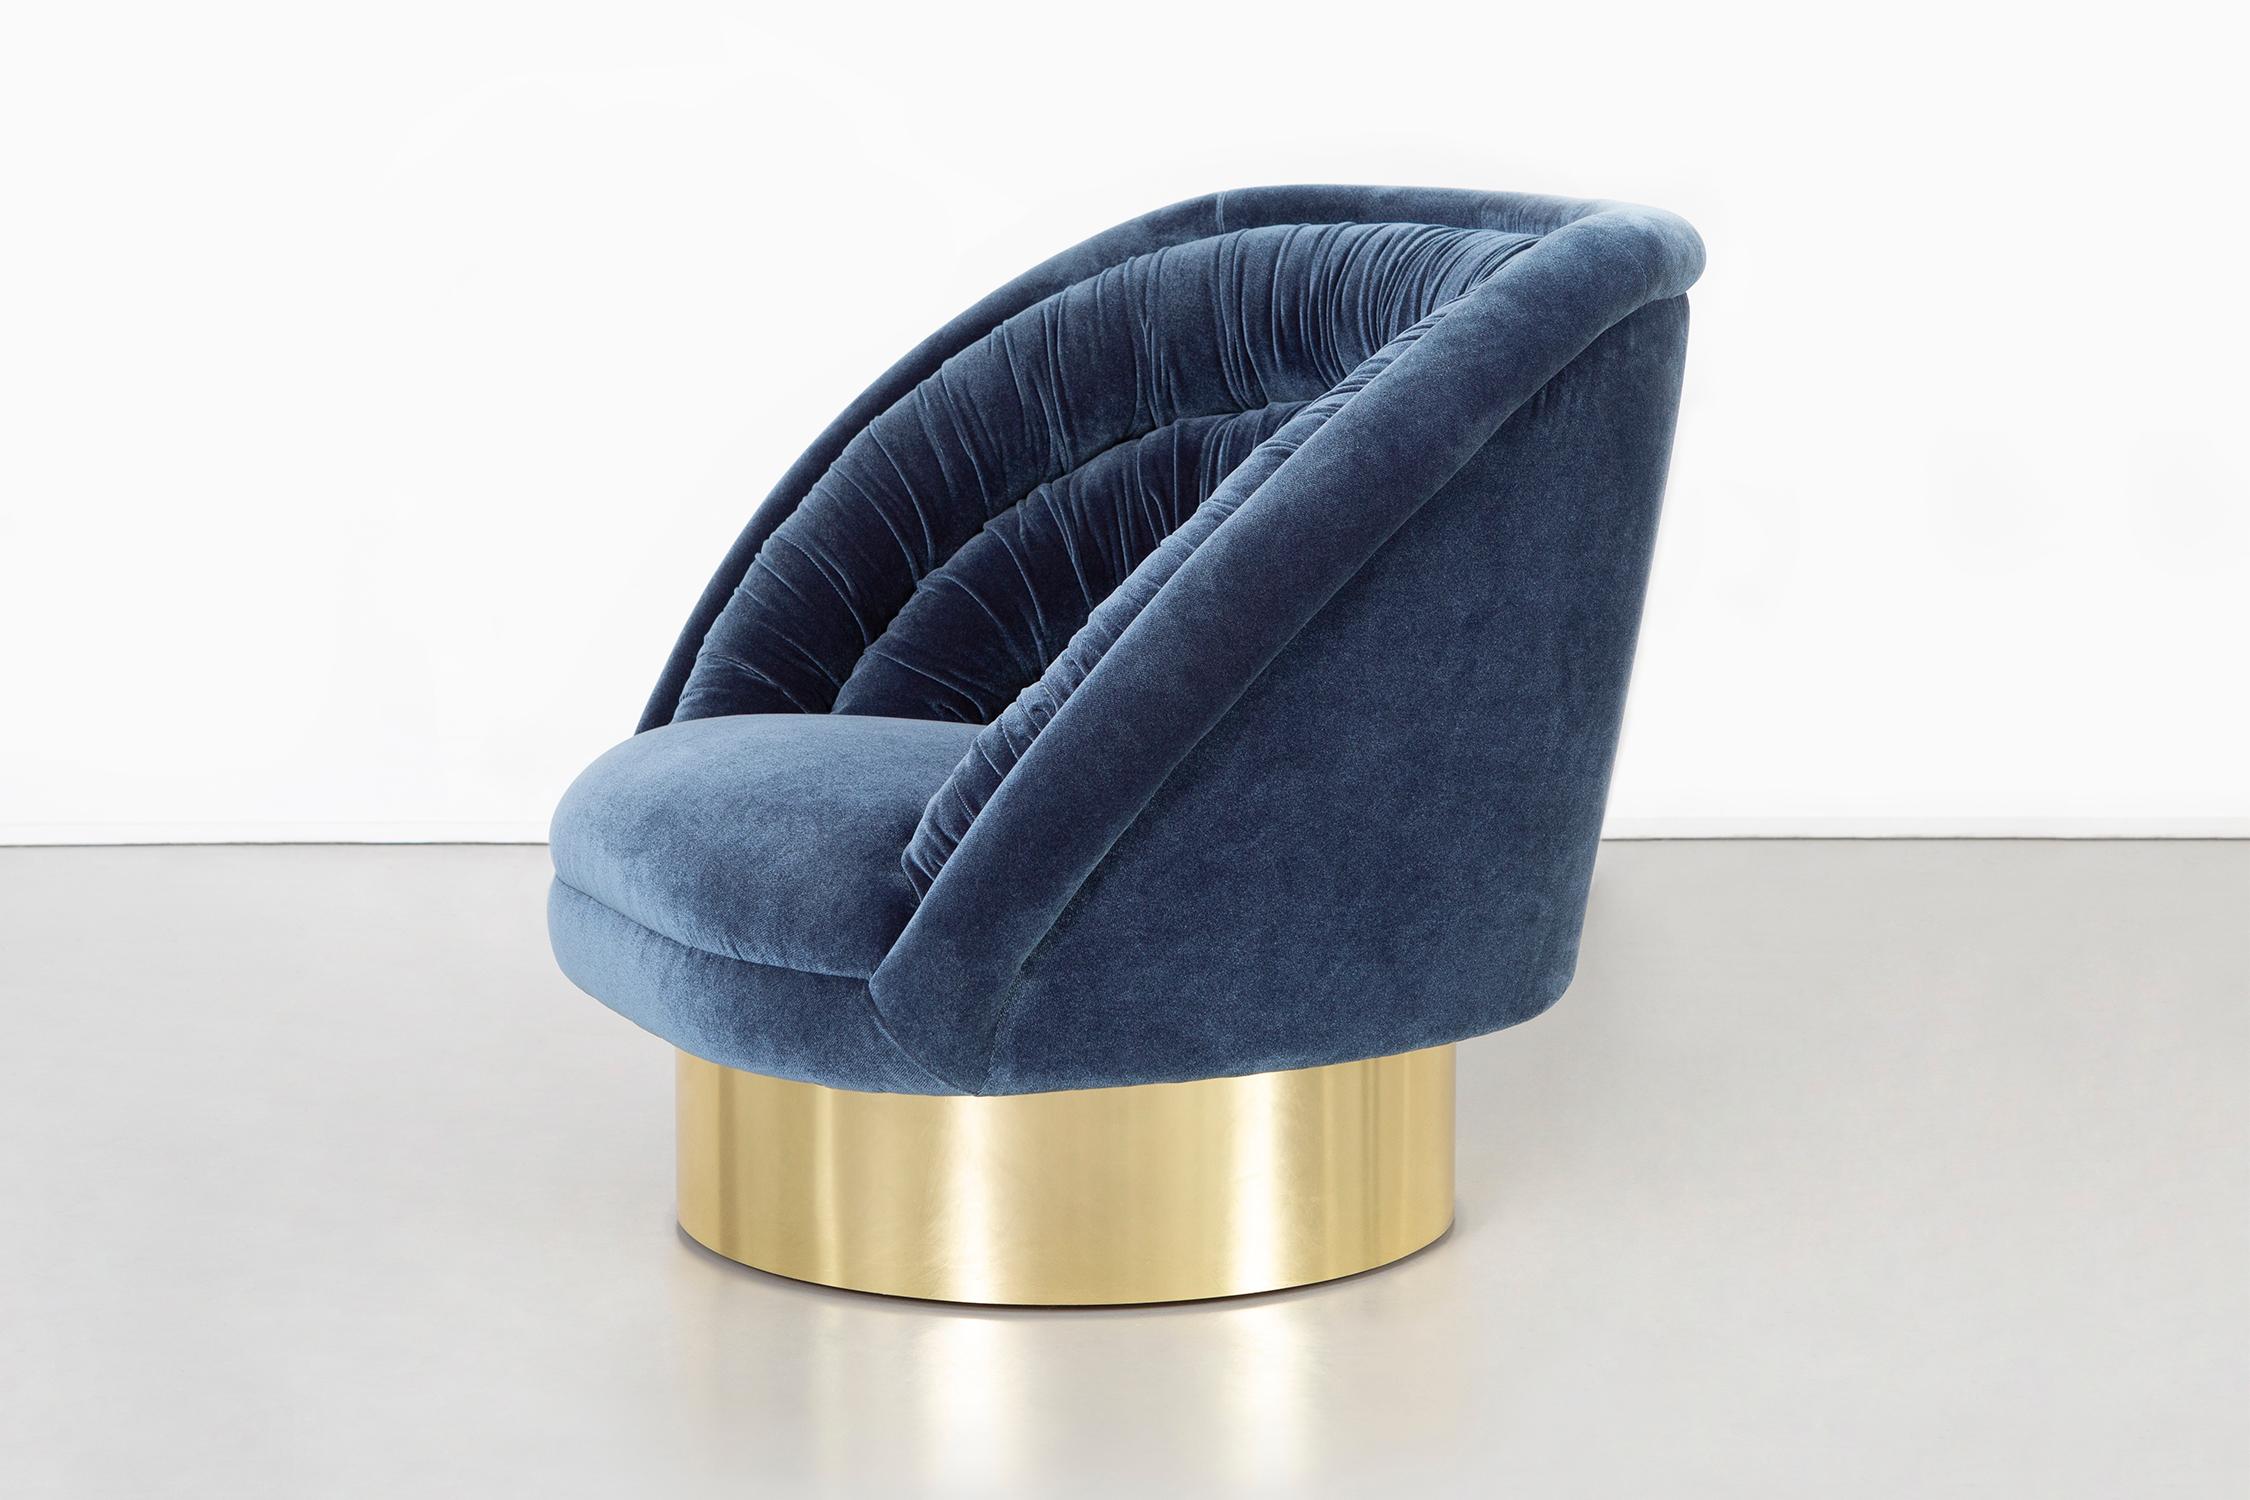 American Set of Vladimir Kagan Crescent Chairs Freshly Reupholstered